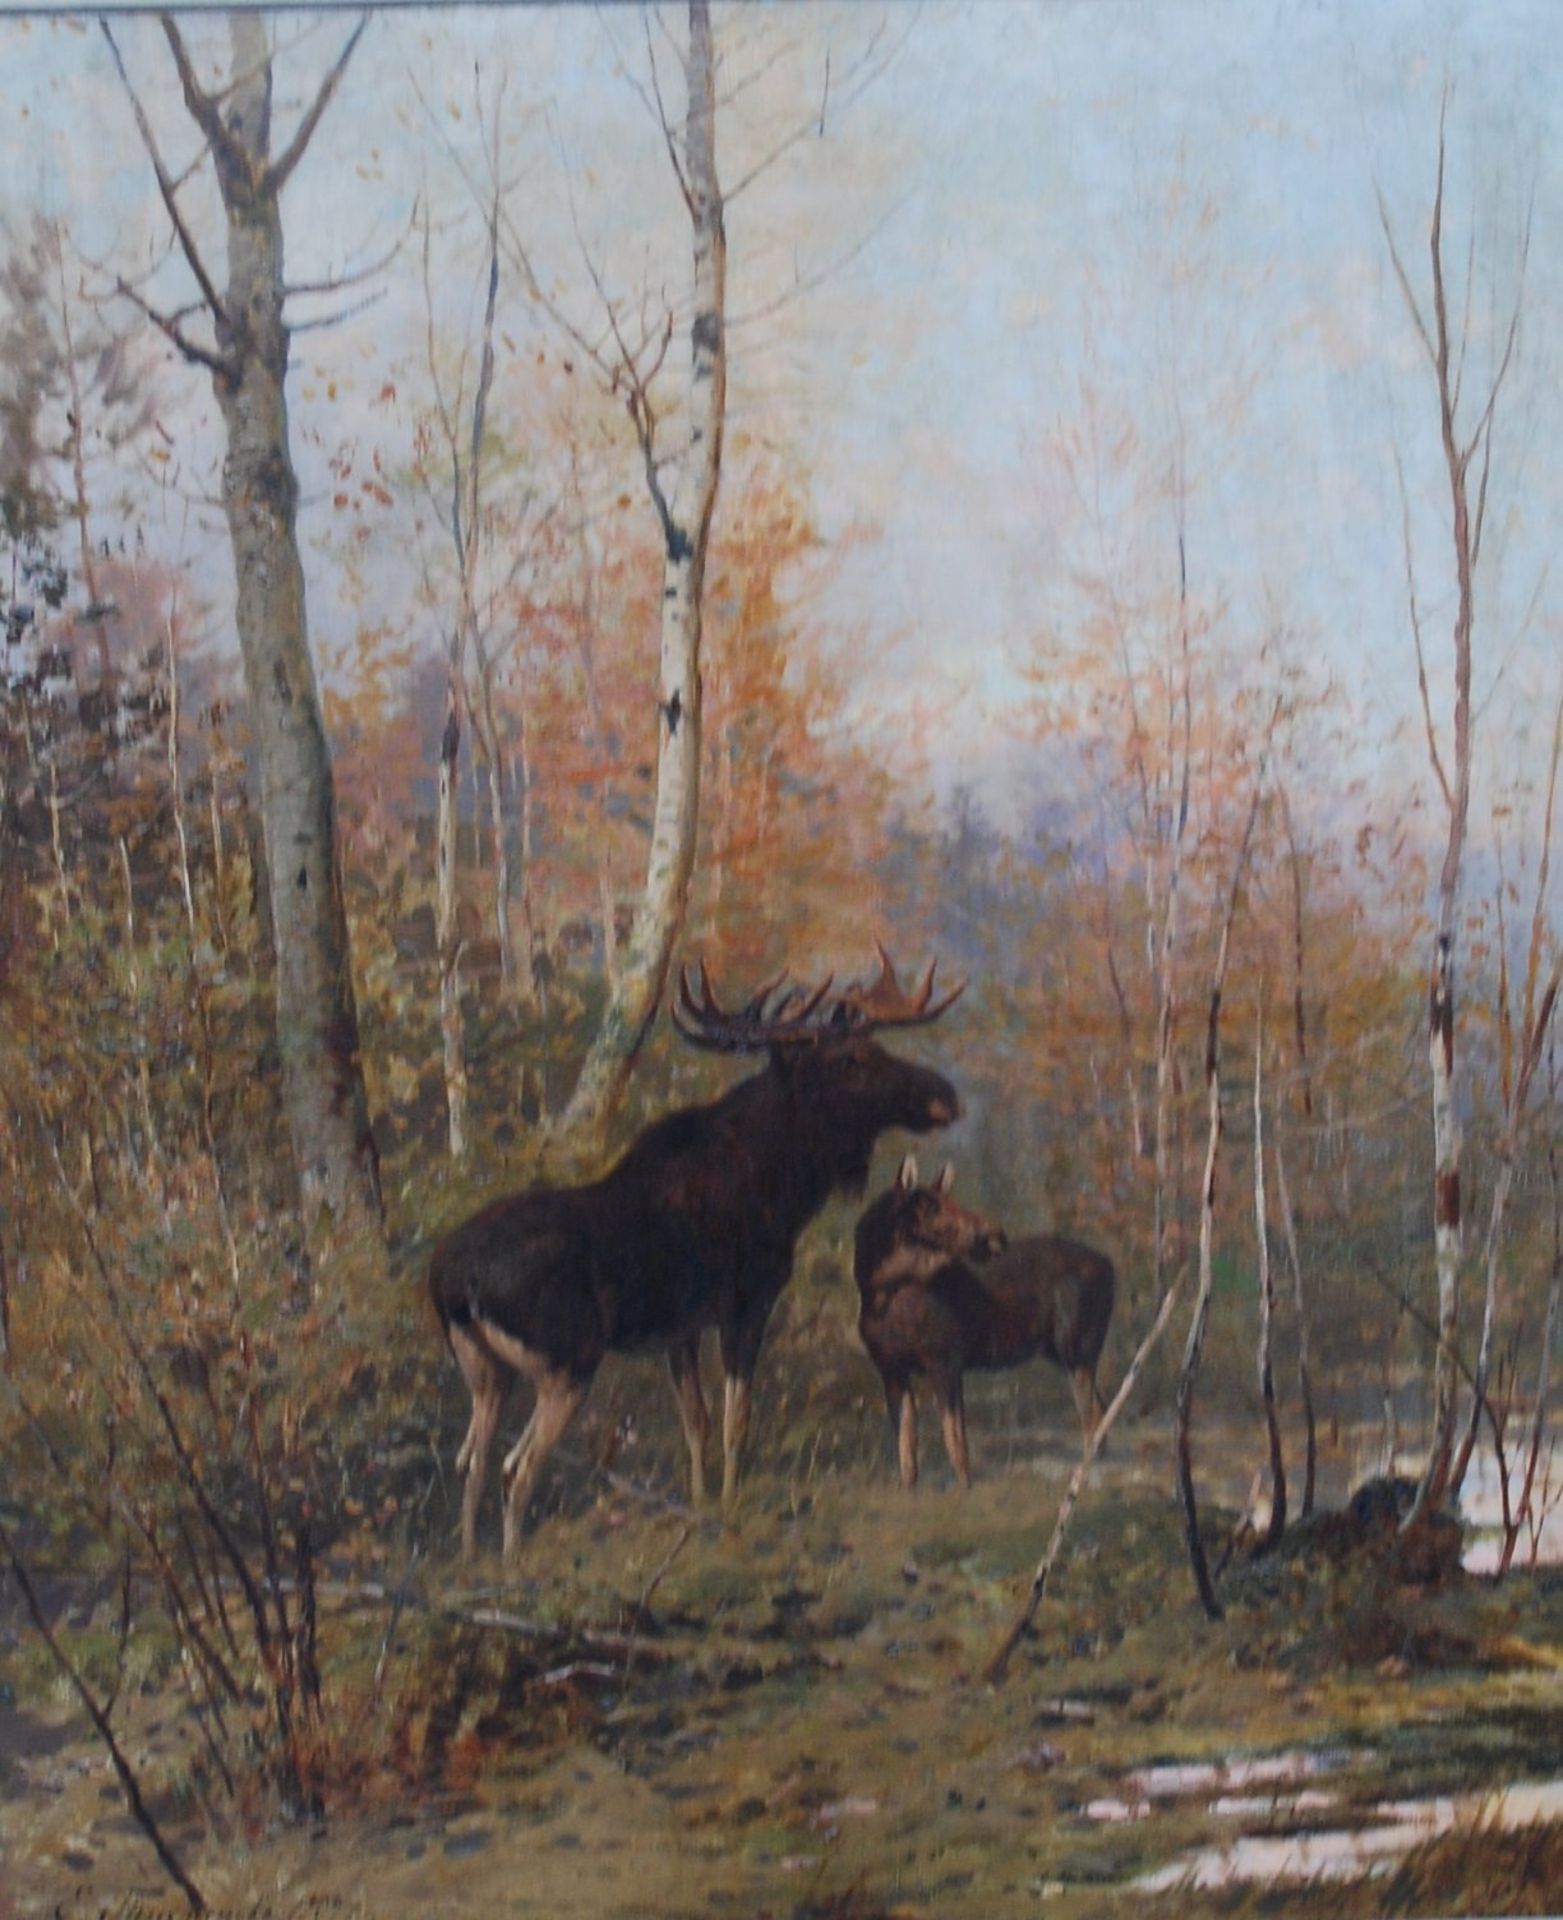 Efim TIKHMENEV (1869-1934), 1909 "Elche im Herbstwald", Öl/Leinen, ,82x67 cm, gerahmt, RG 100x84 cm,